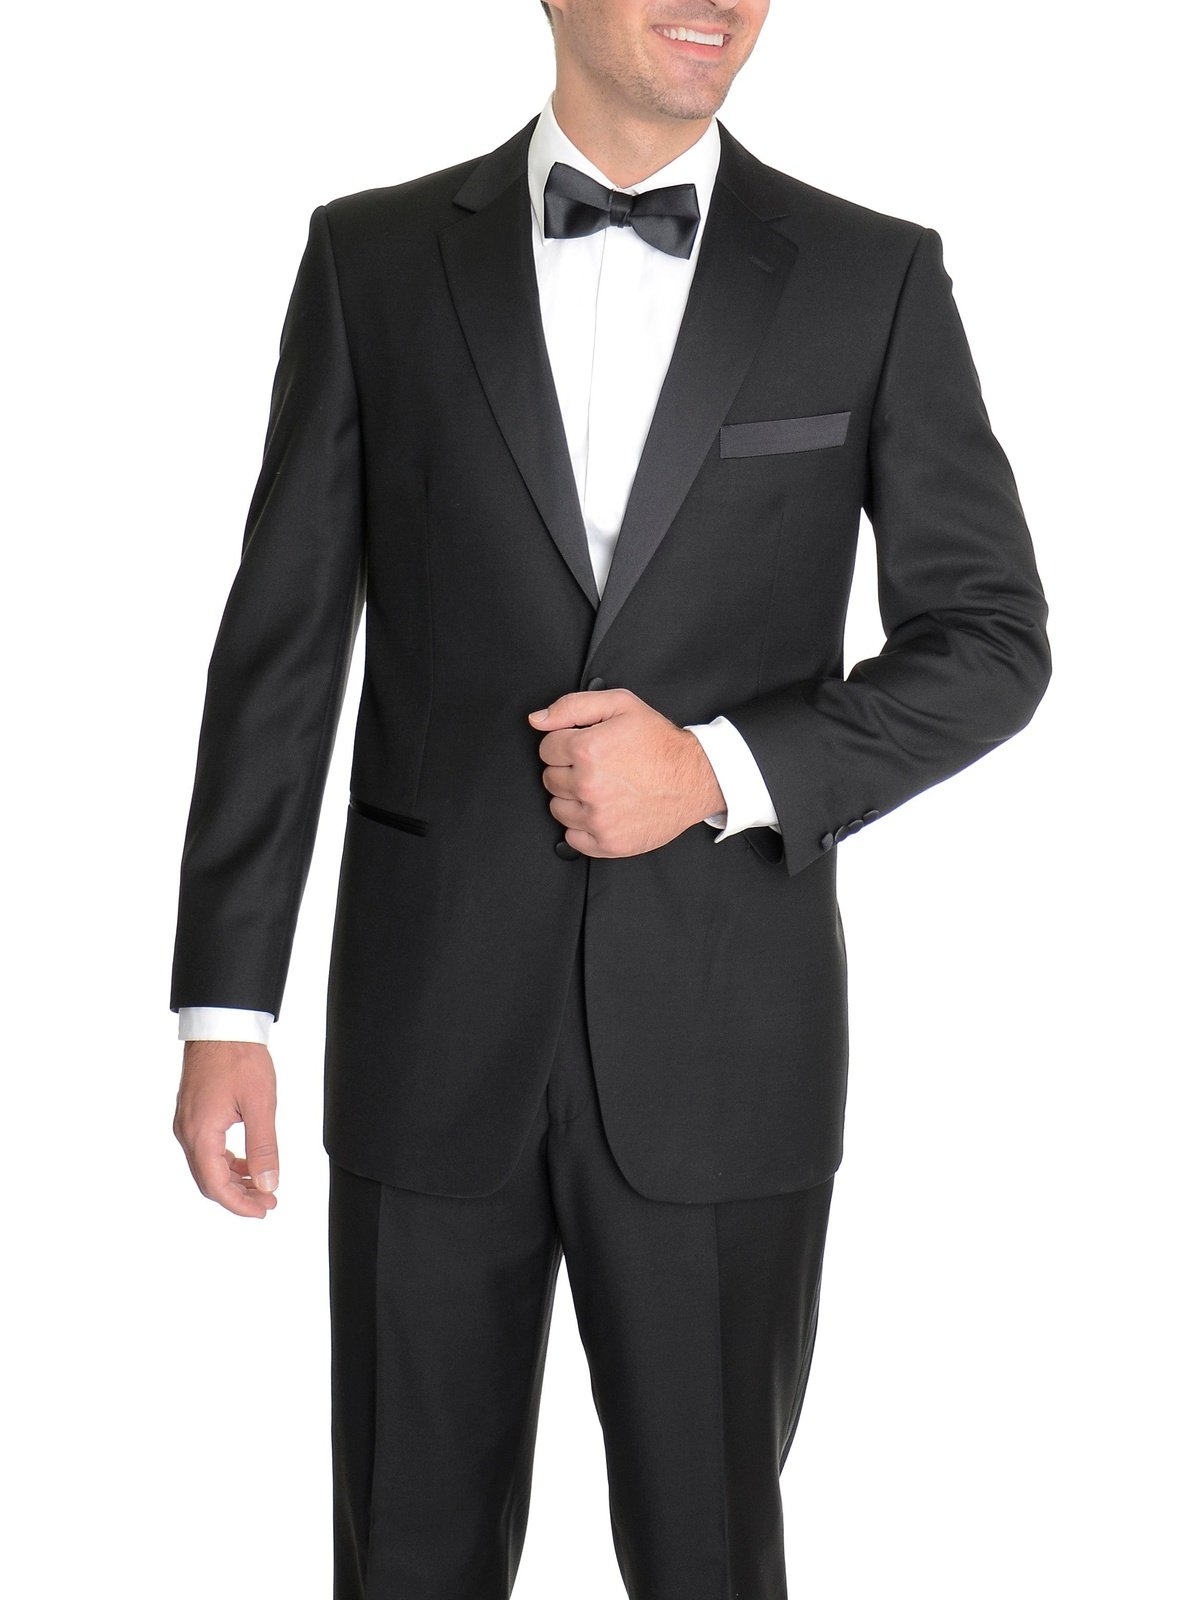 Raphael TUXEDOS Raphael Slim Fit Solid Black Tuxedo Suit With Satin Stripe On Pant